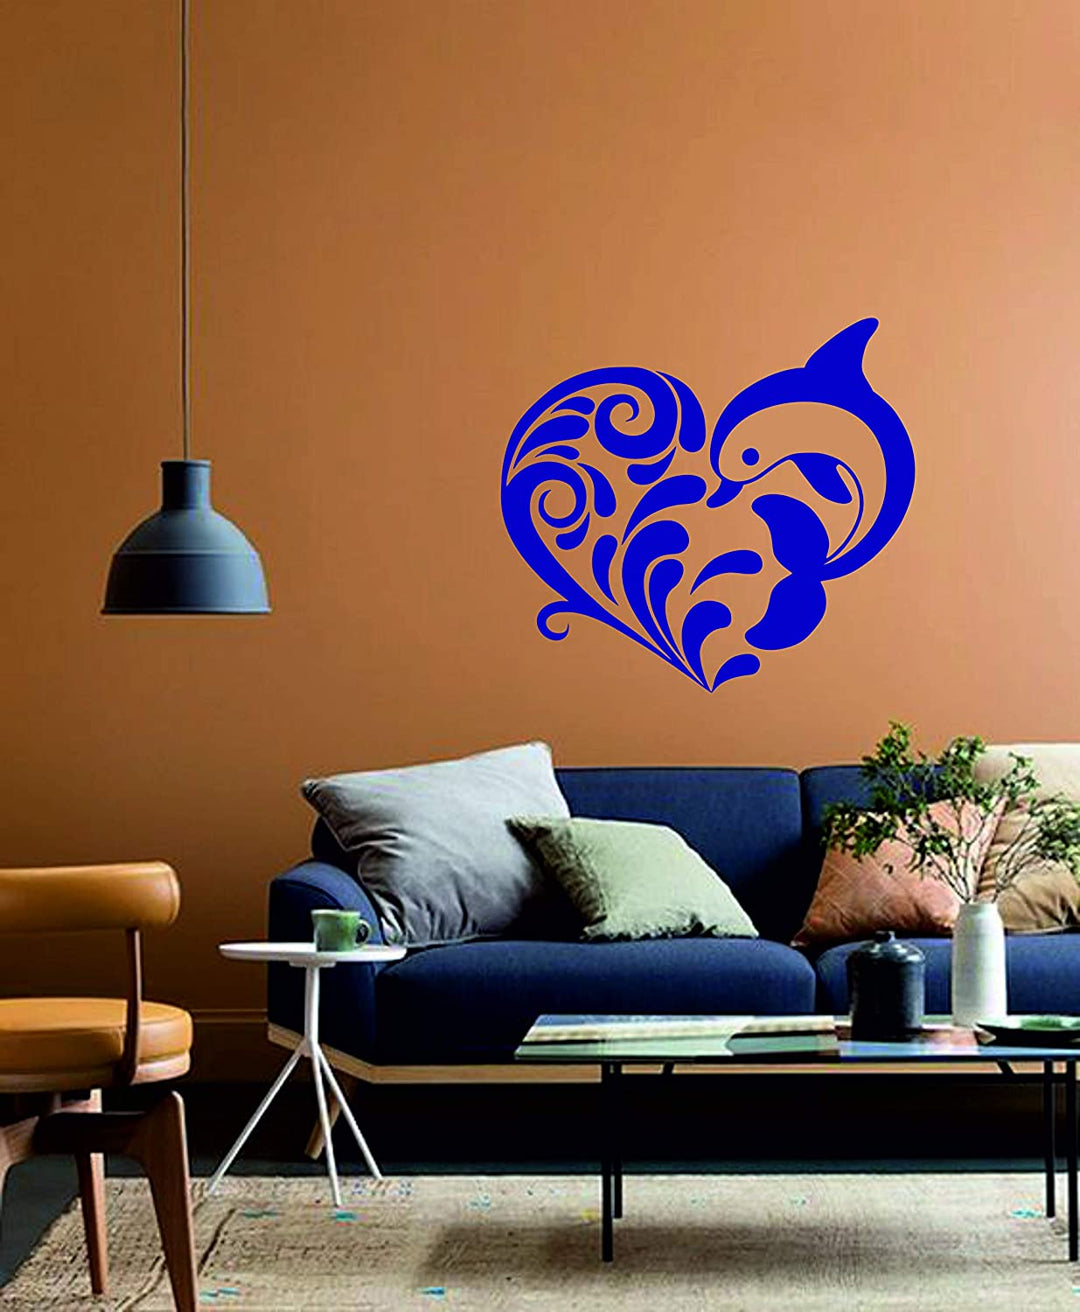 Heart Dolphin Vinyl Wall Sticker for Wall Decoration_(58.5 X 52.9cm)